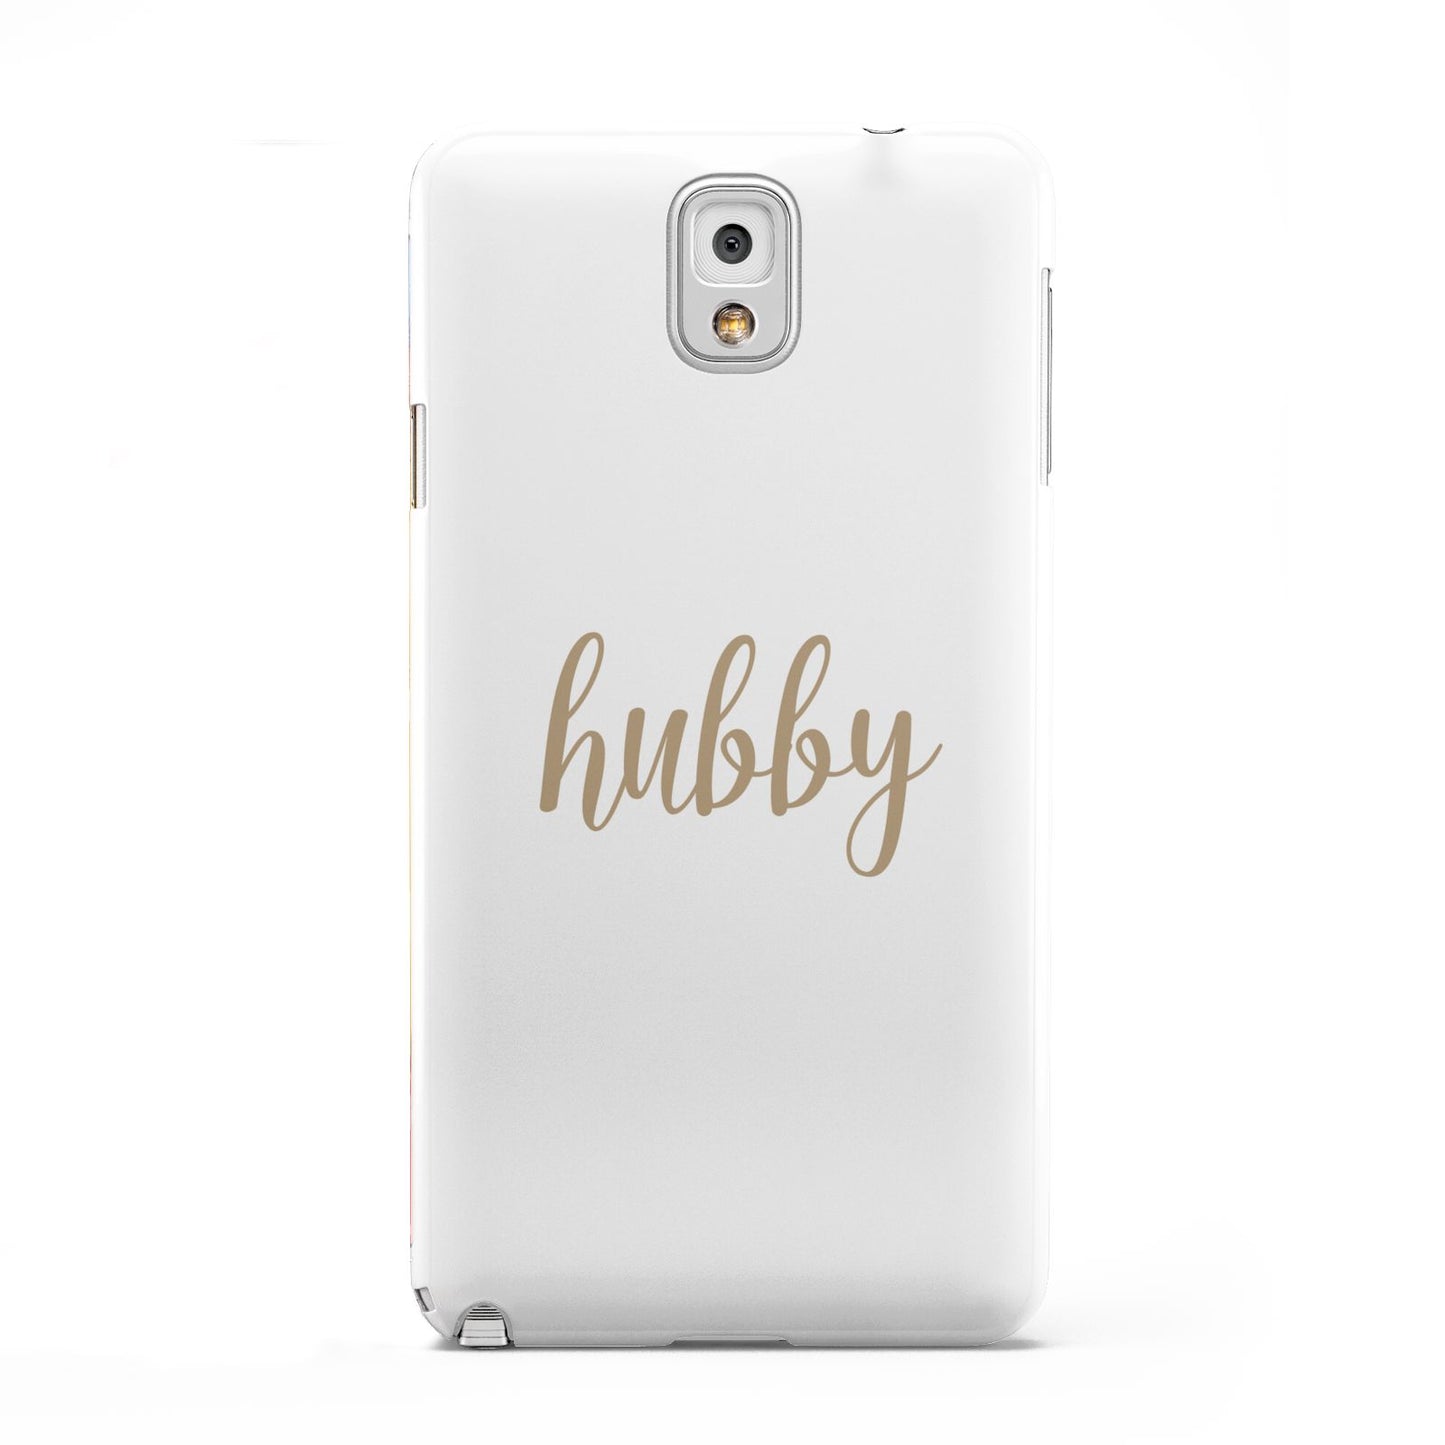 Hubby Samsung Galaxy Note 3 Case